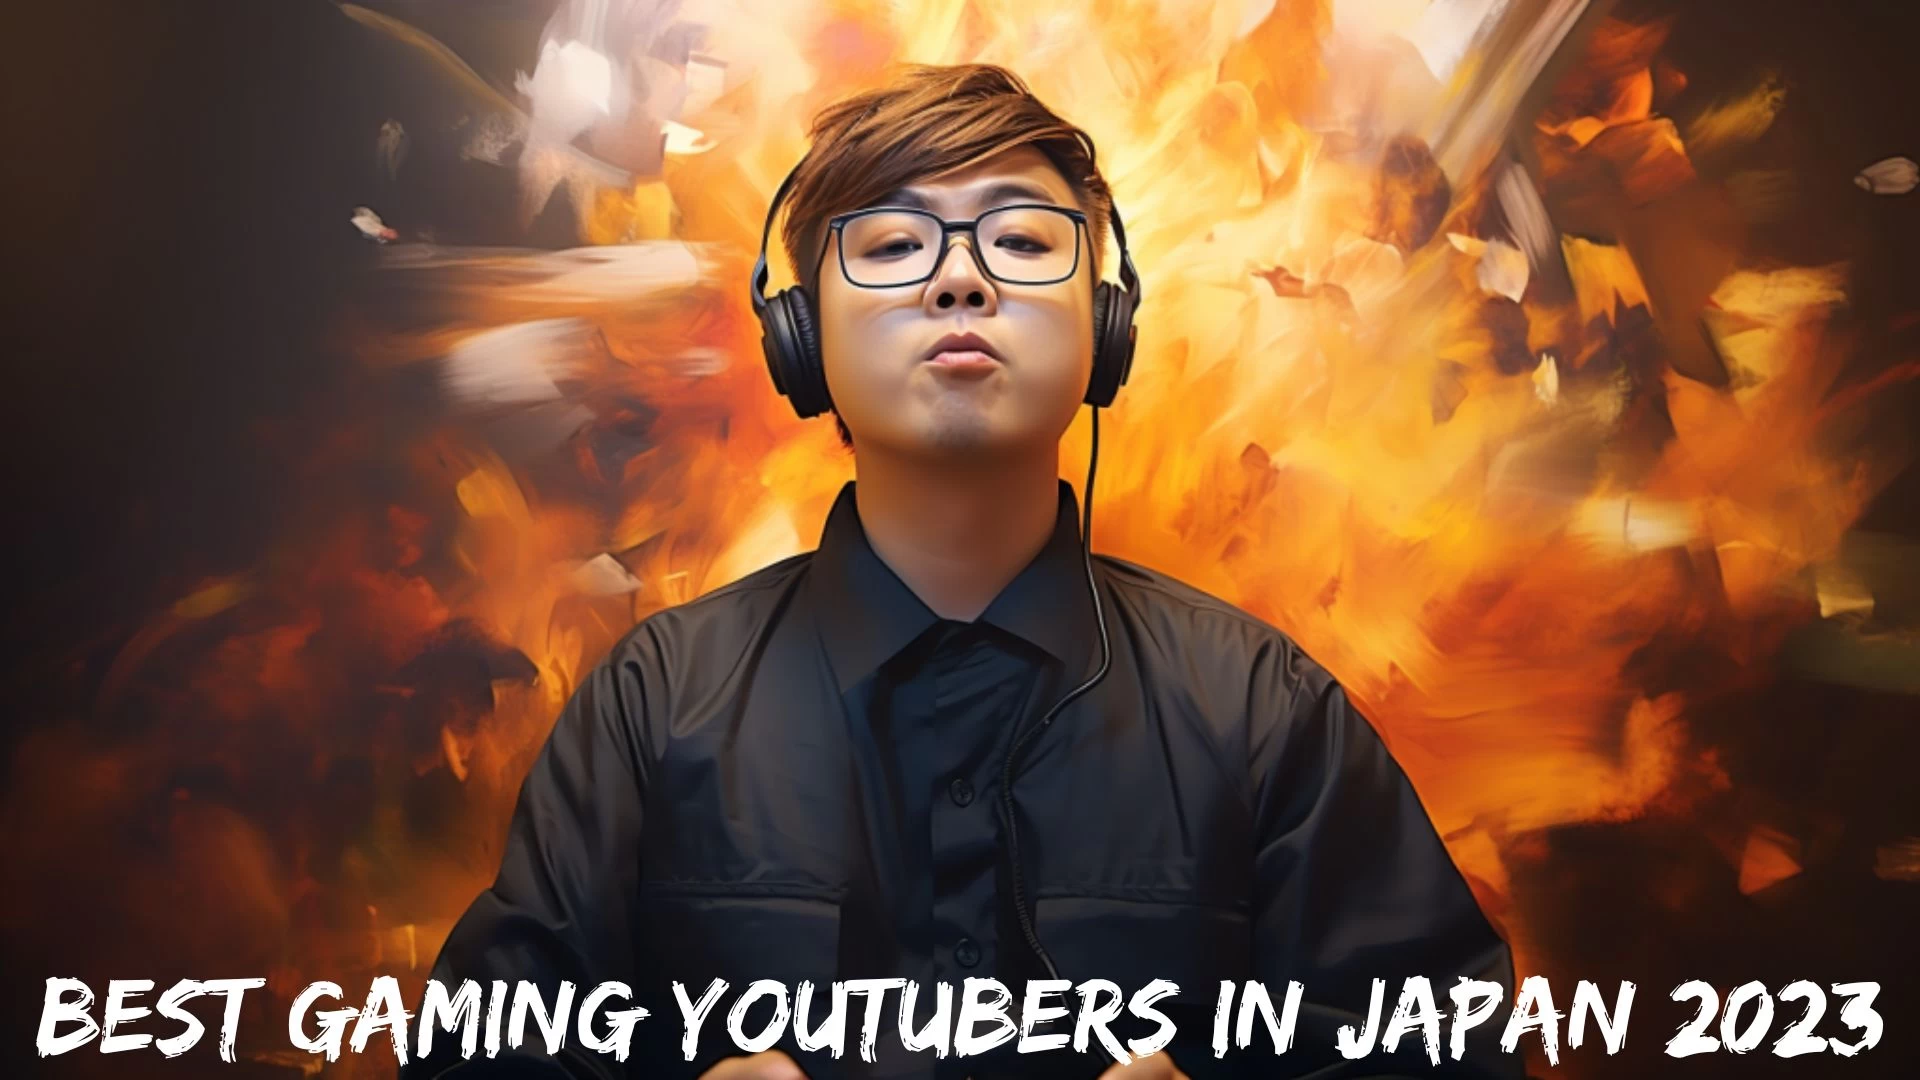 Best Gaming YouTubers in Japan 2023 - Exploring the Top 10